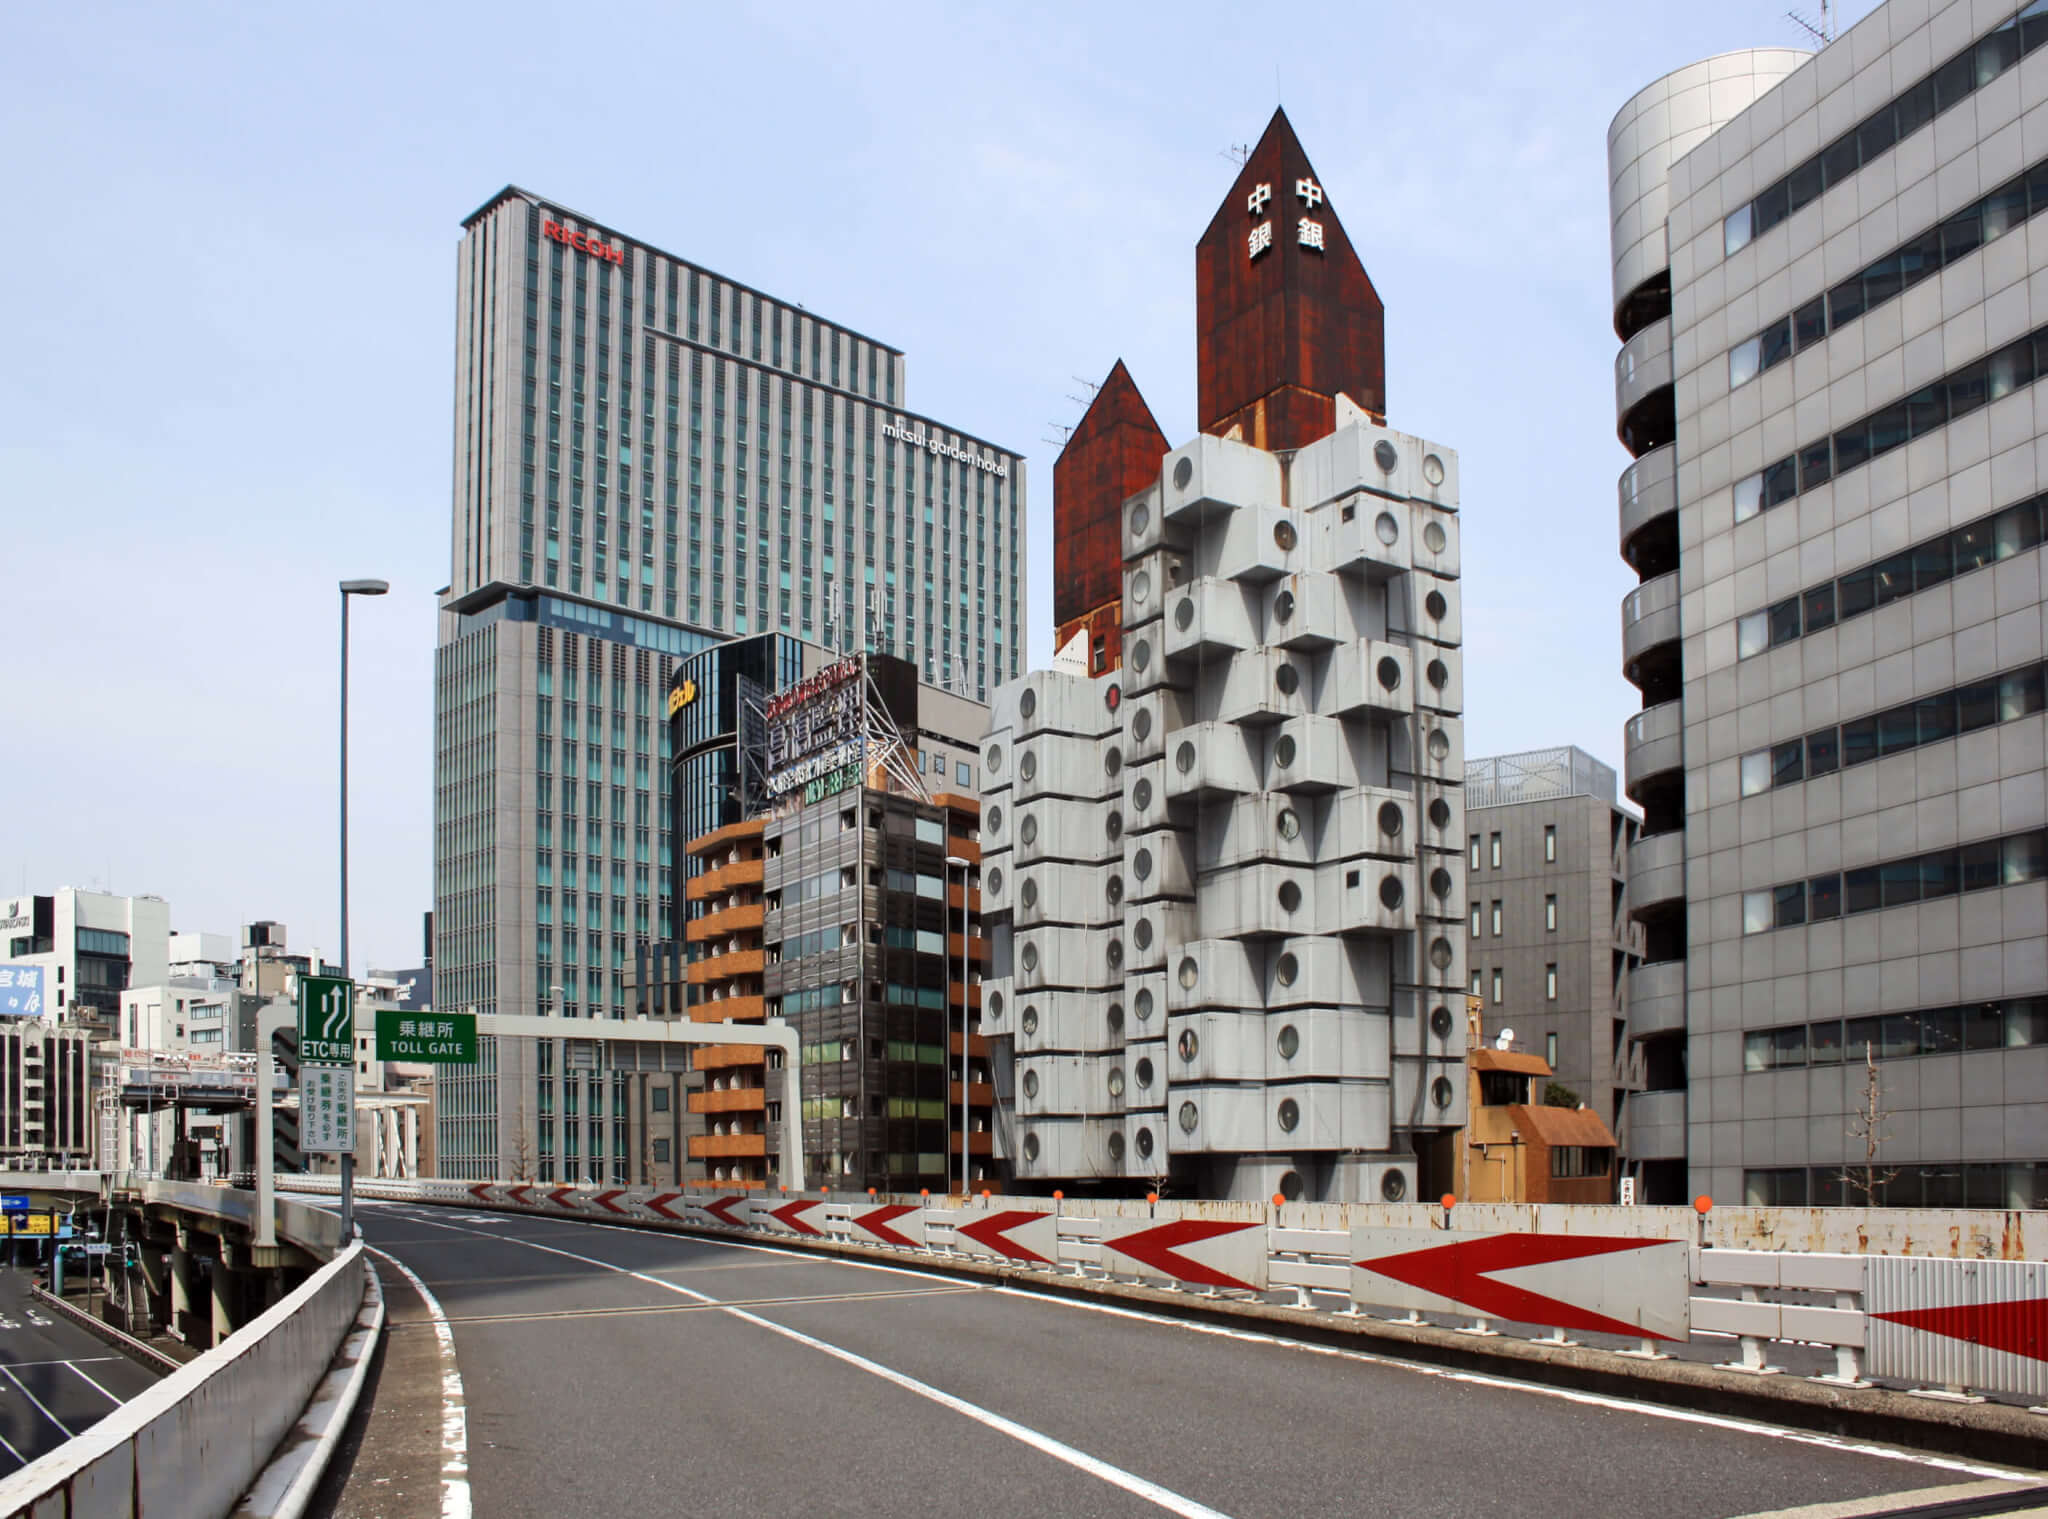 nakagin capsule tower and city street